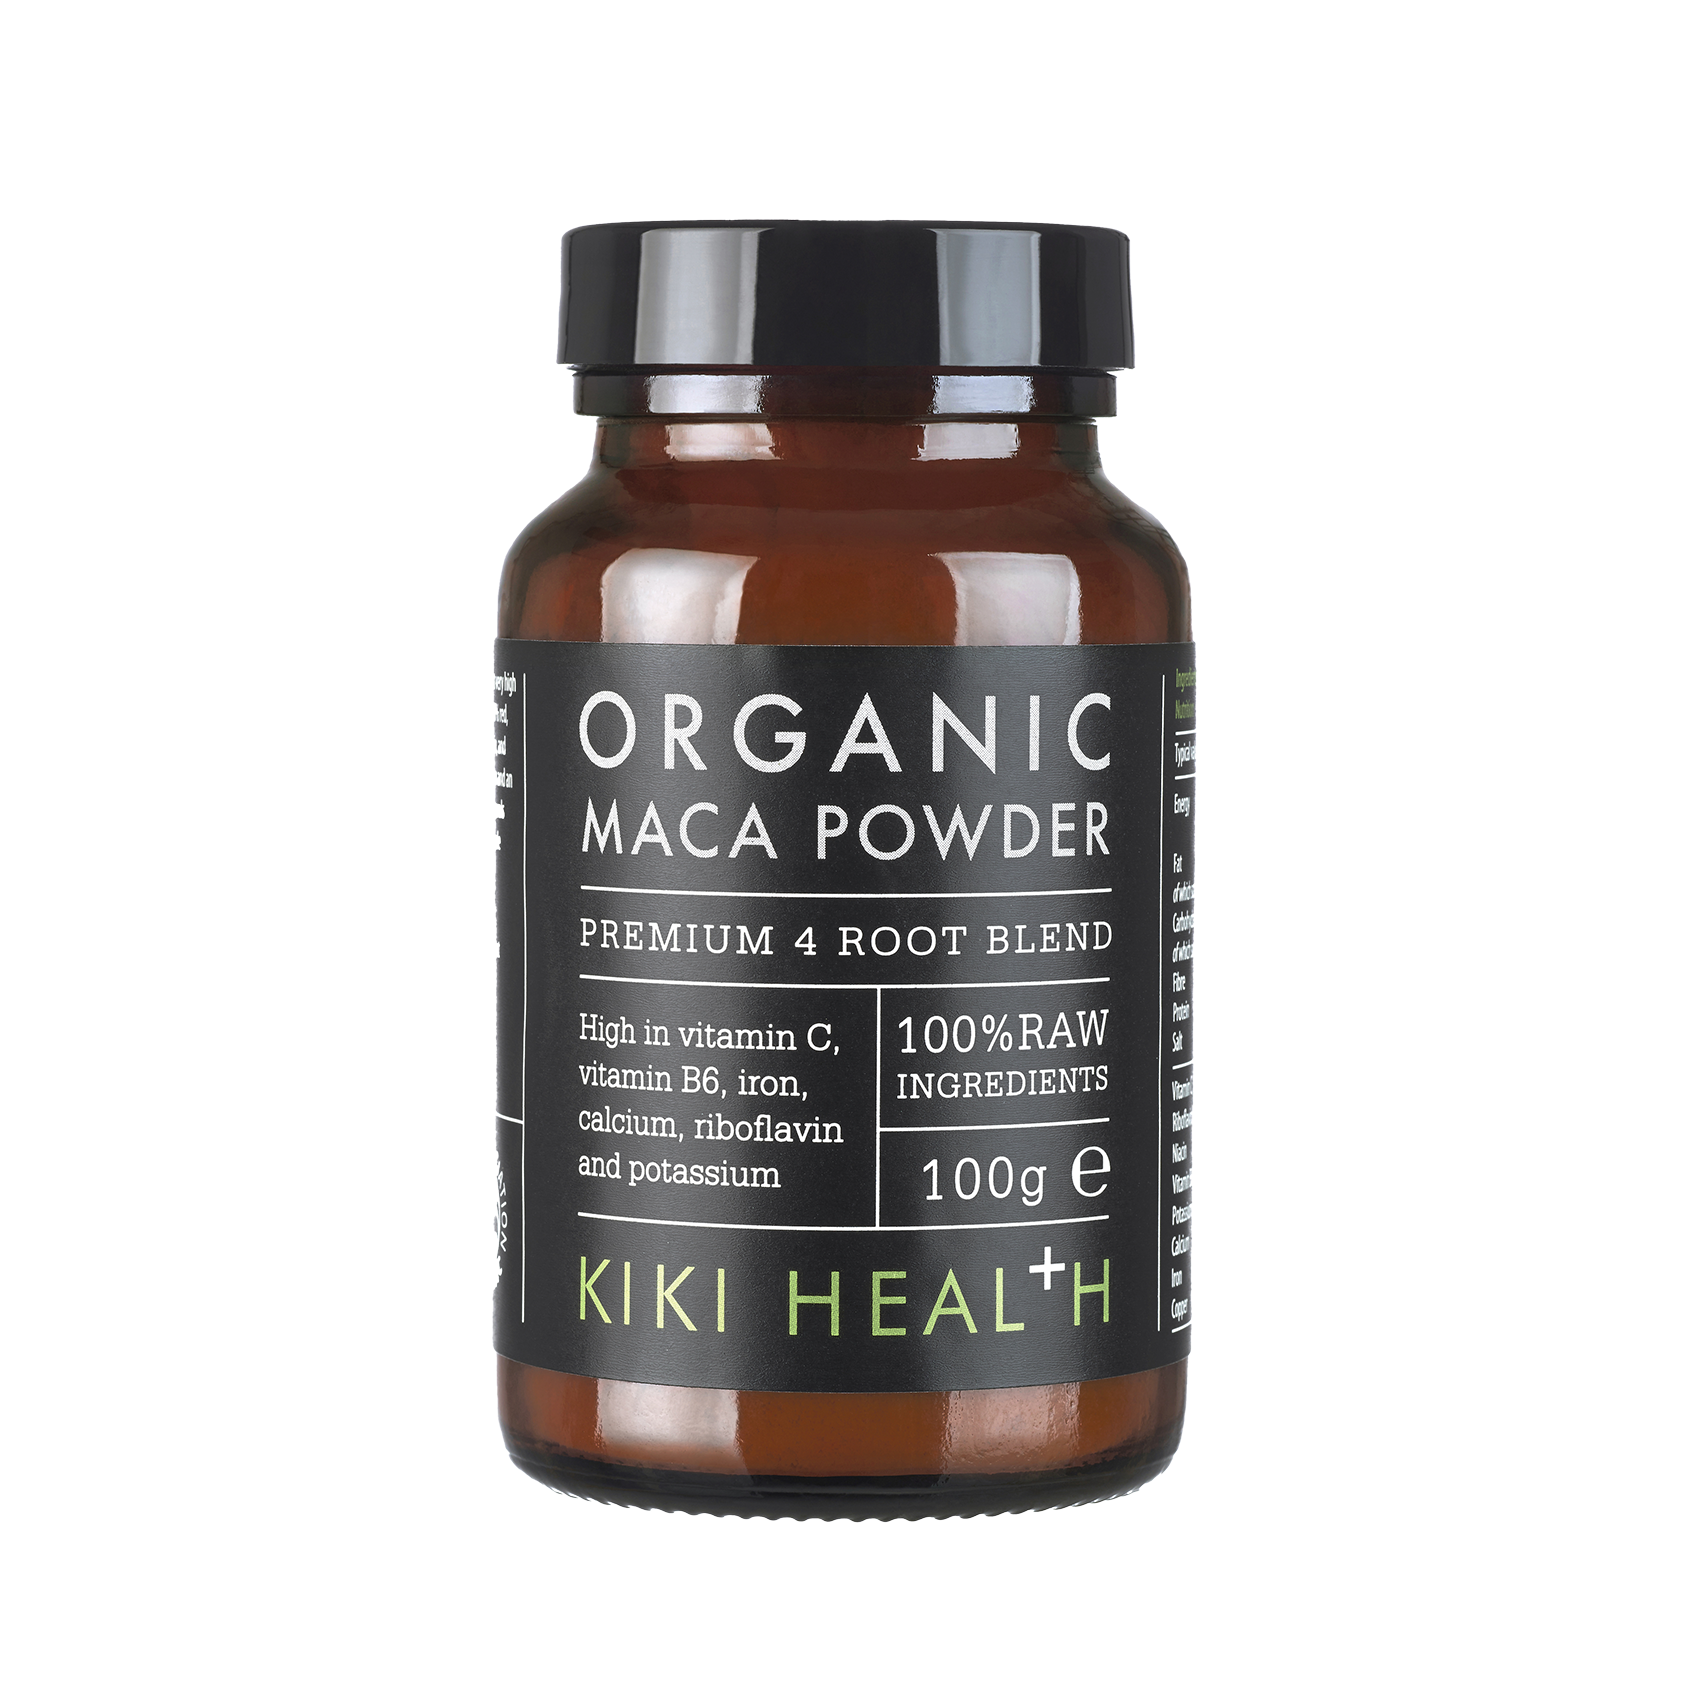 Image of Bonasana Health Maca Powder supplement container